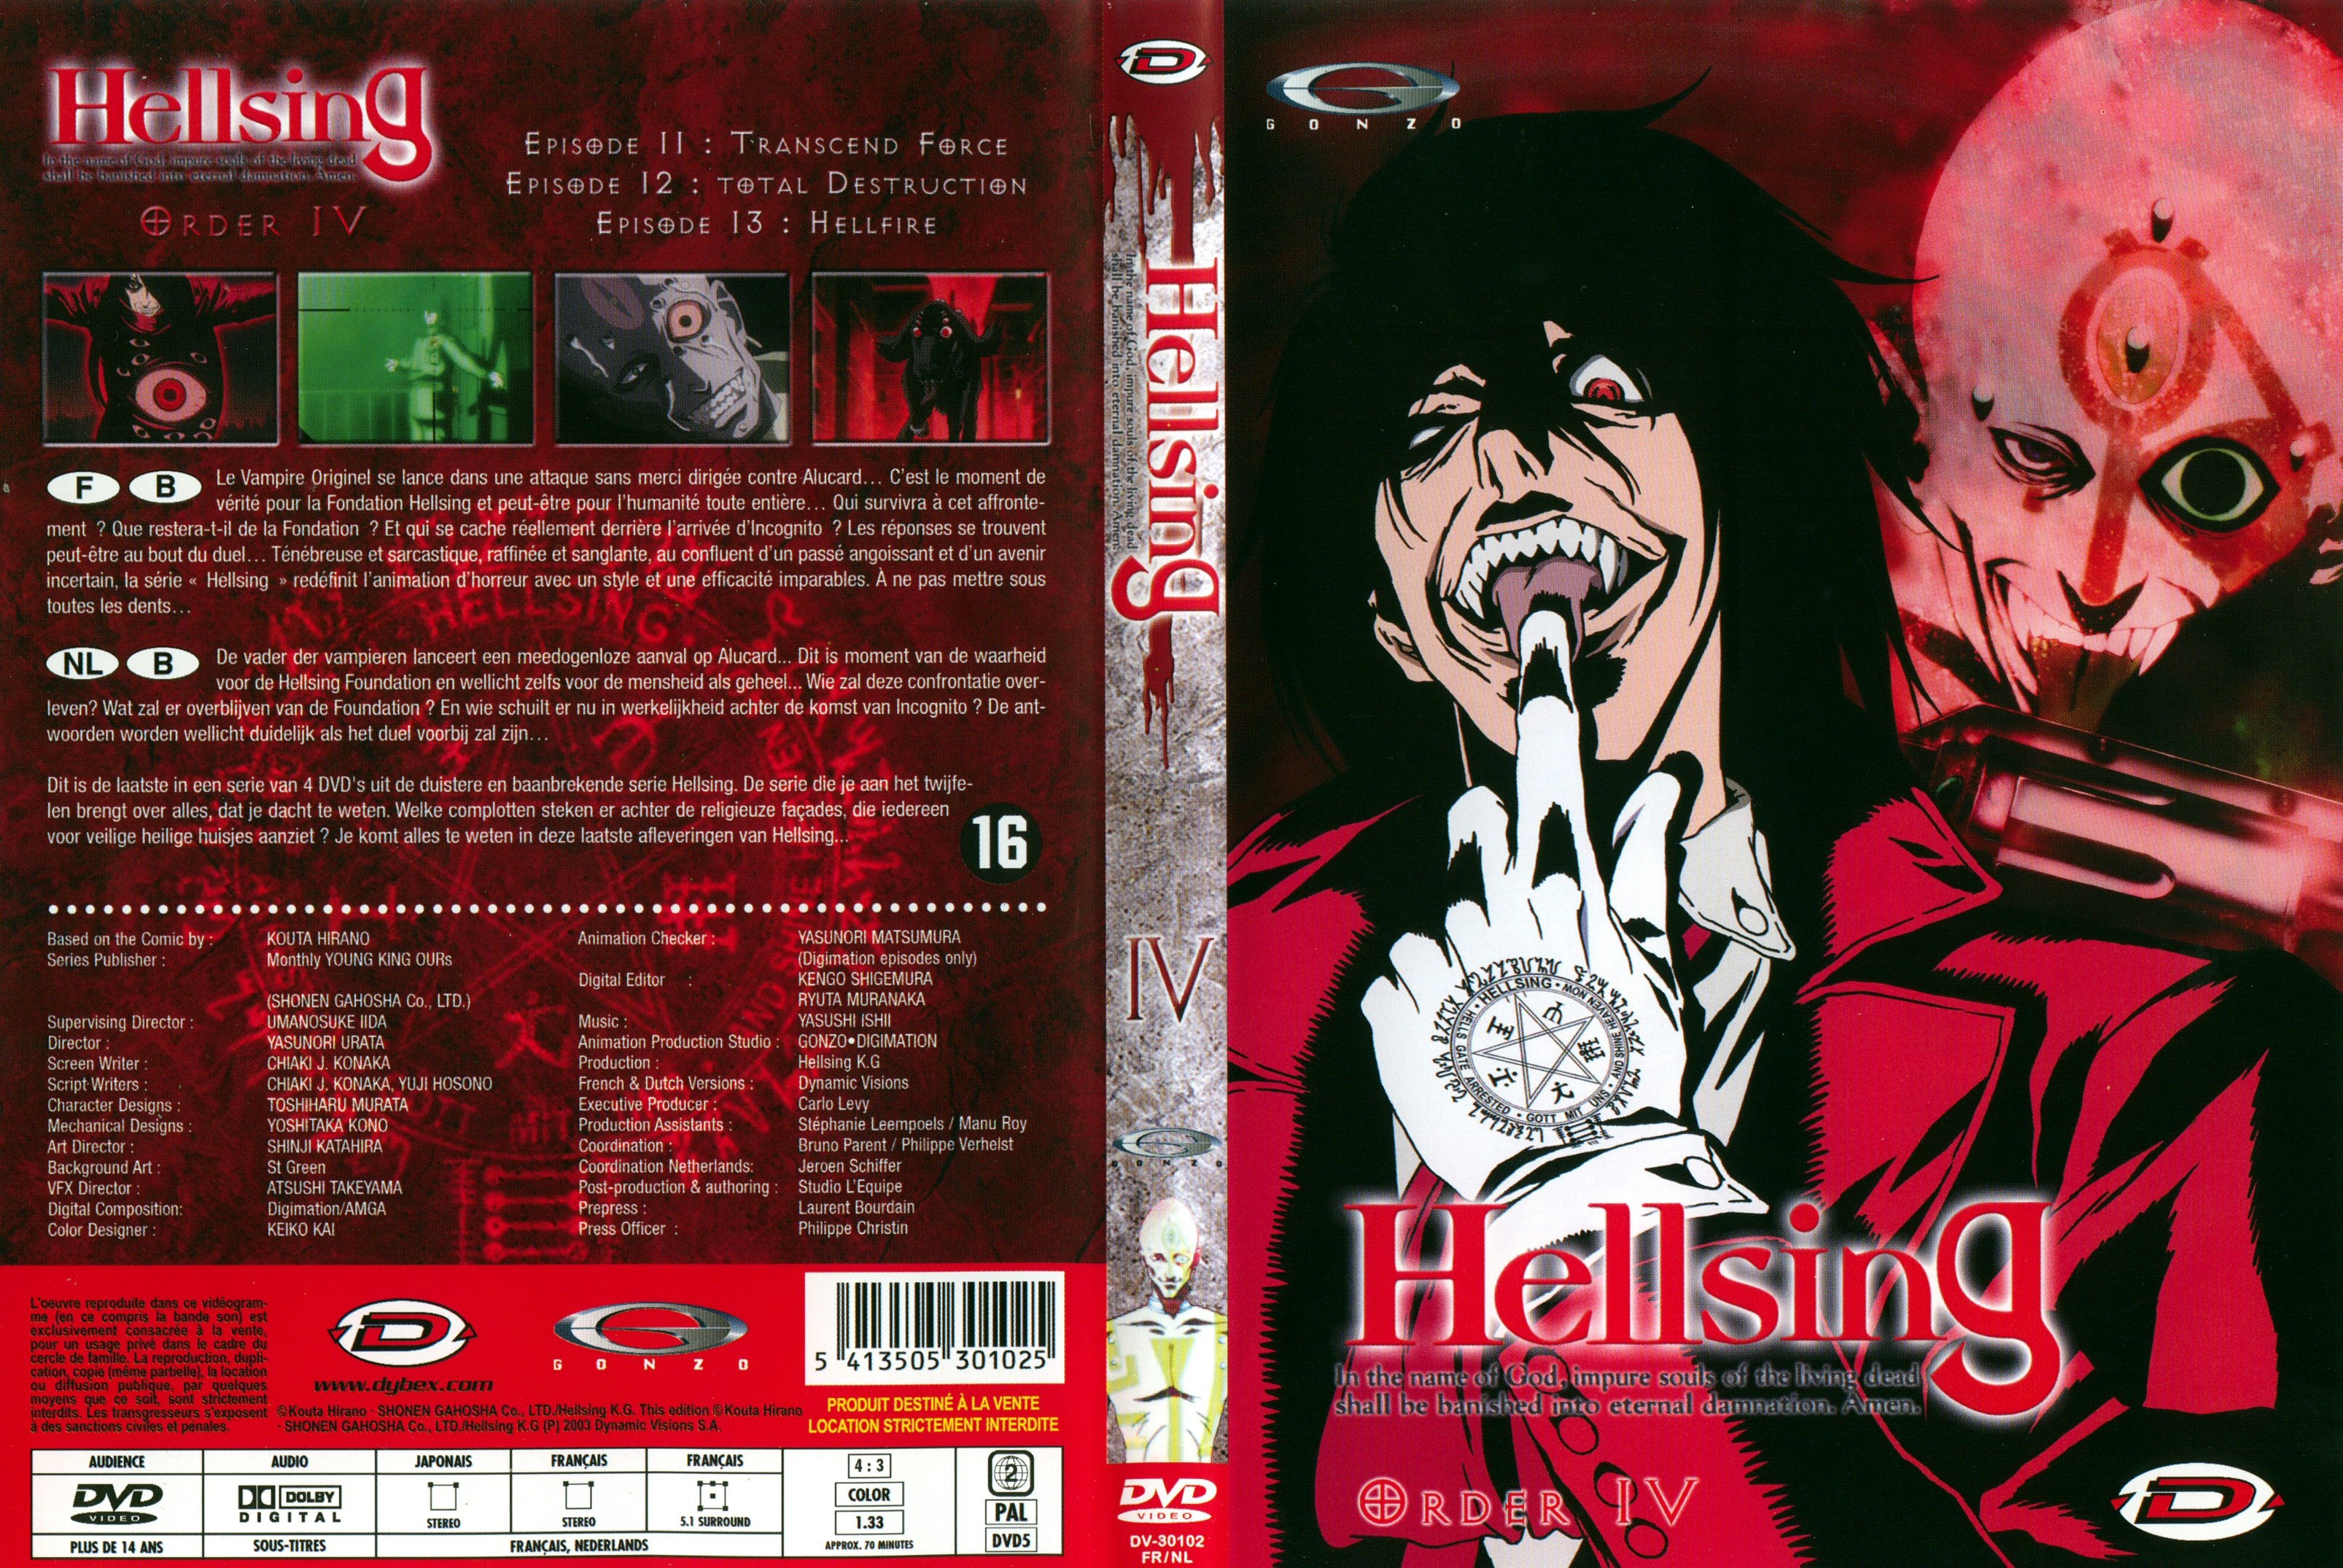 Jaquette DVD Hellsing vol 4